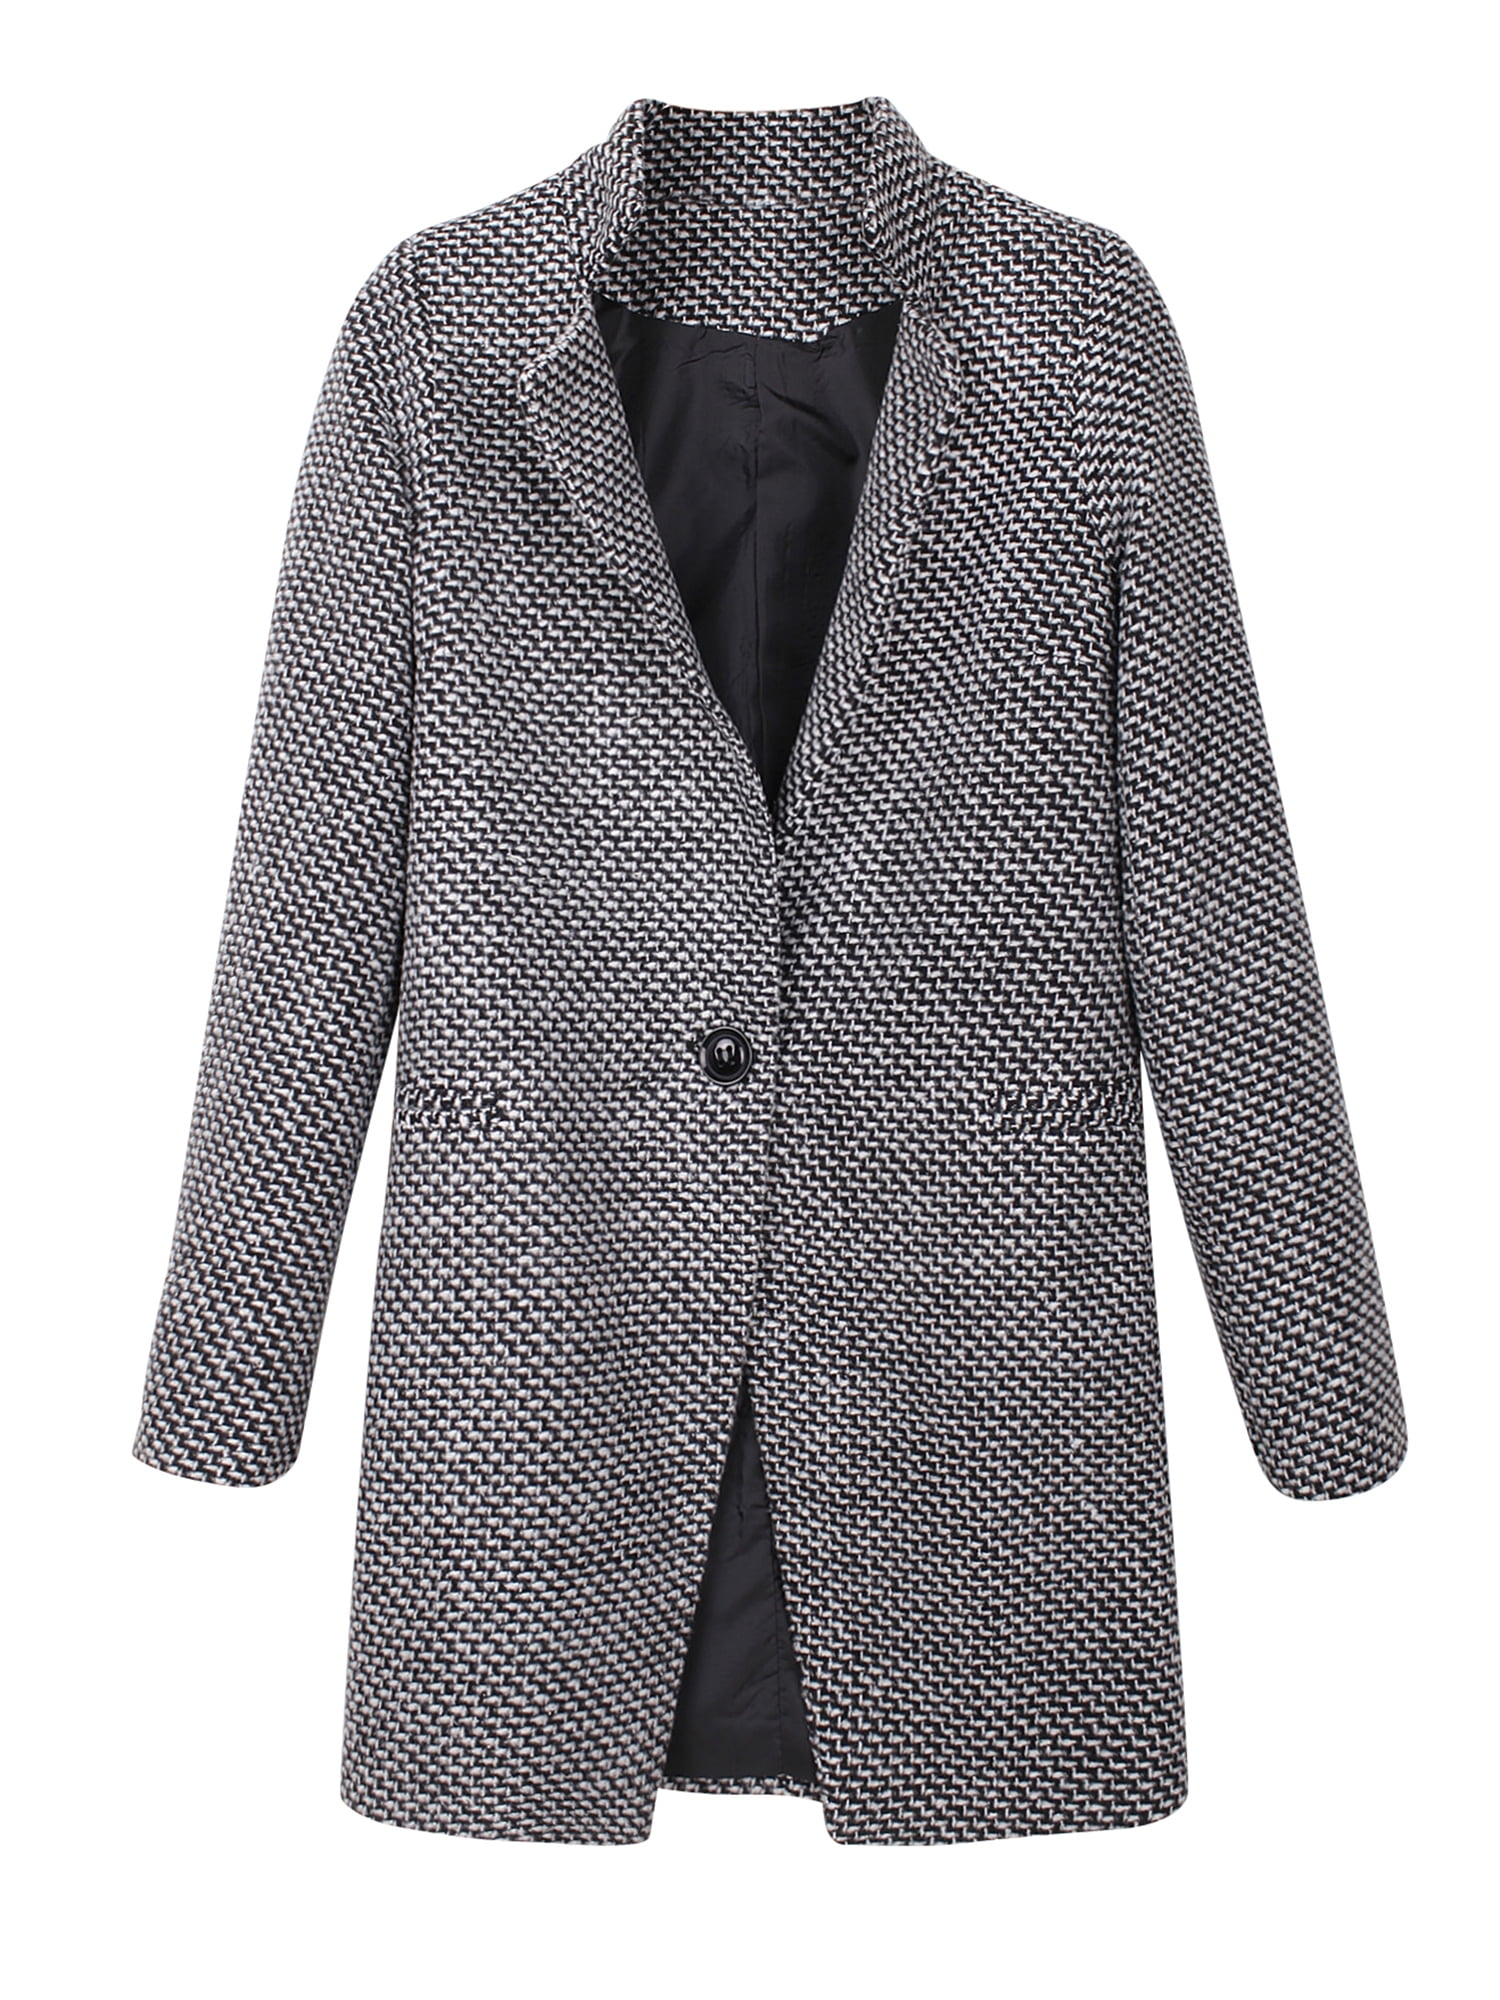 Plus Size Warm Winter Coats for Women,Women Fashion Print Long Sleeve Turn-Down Collar Houndstooth Coat Windbreaker 